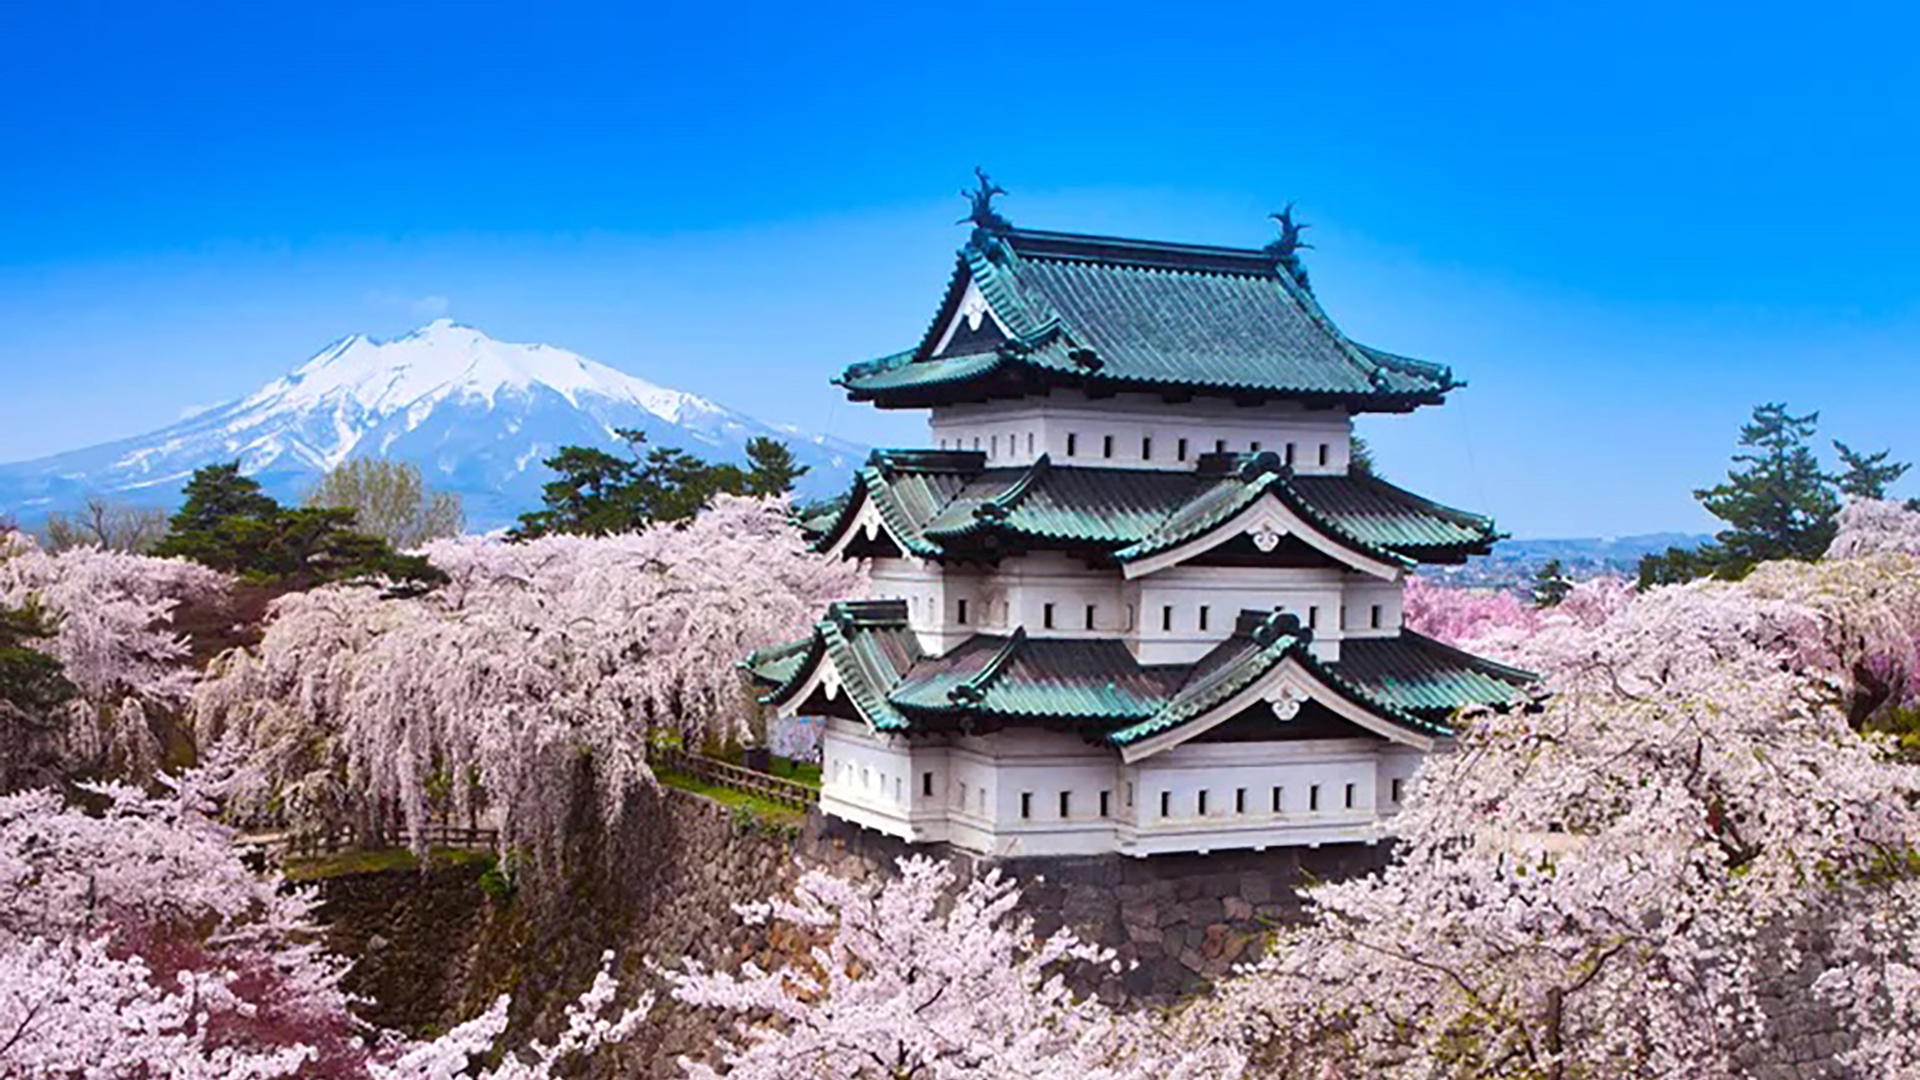 A Travel Advisor Spotlights the Lesser-Known Tourism Appeal of Tohoku, Japan